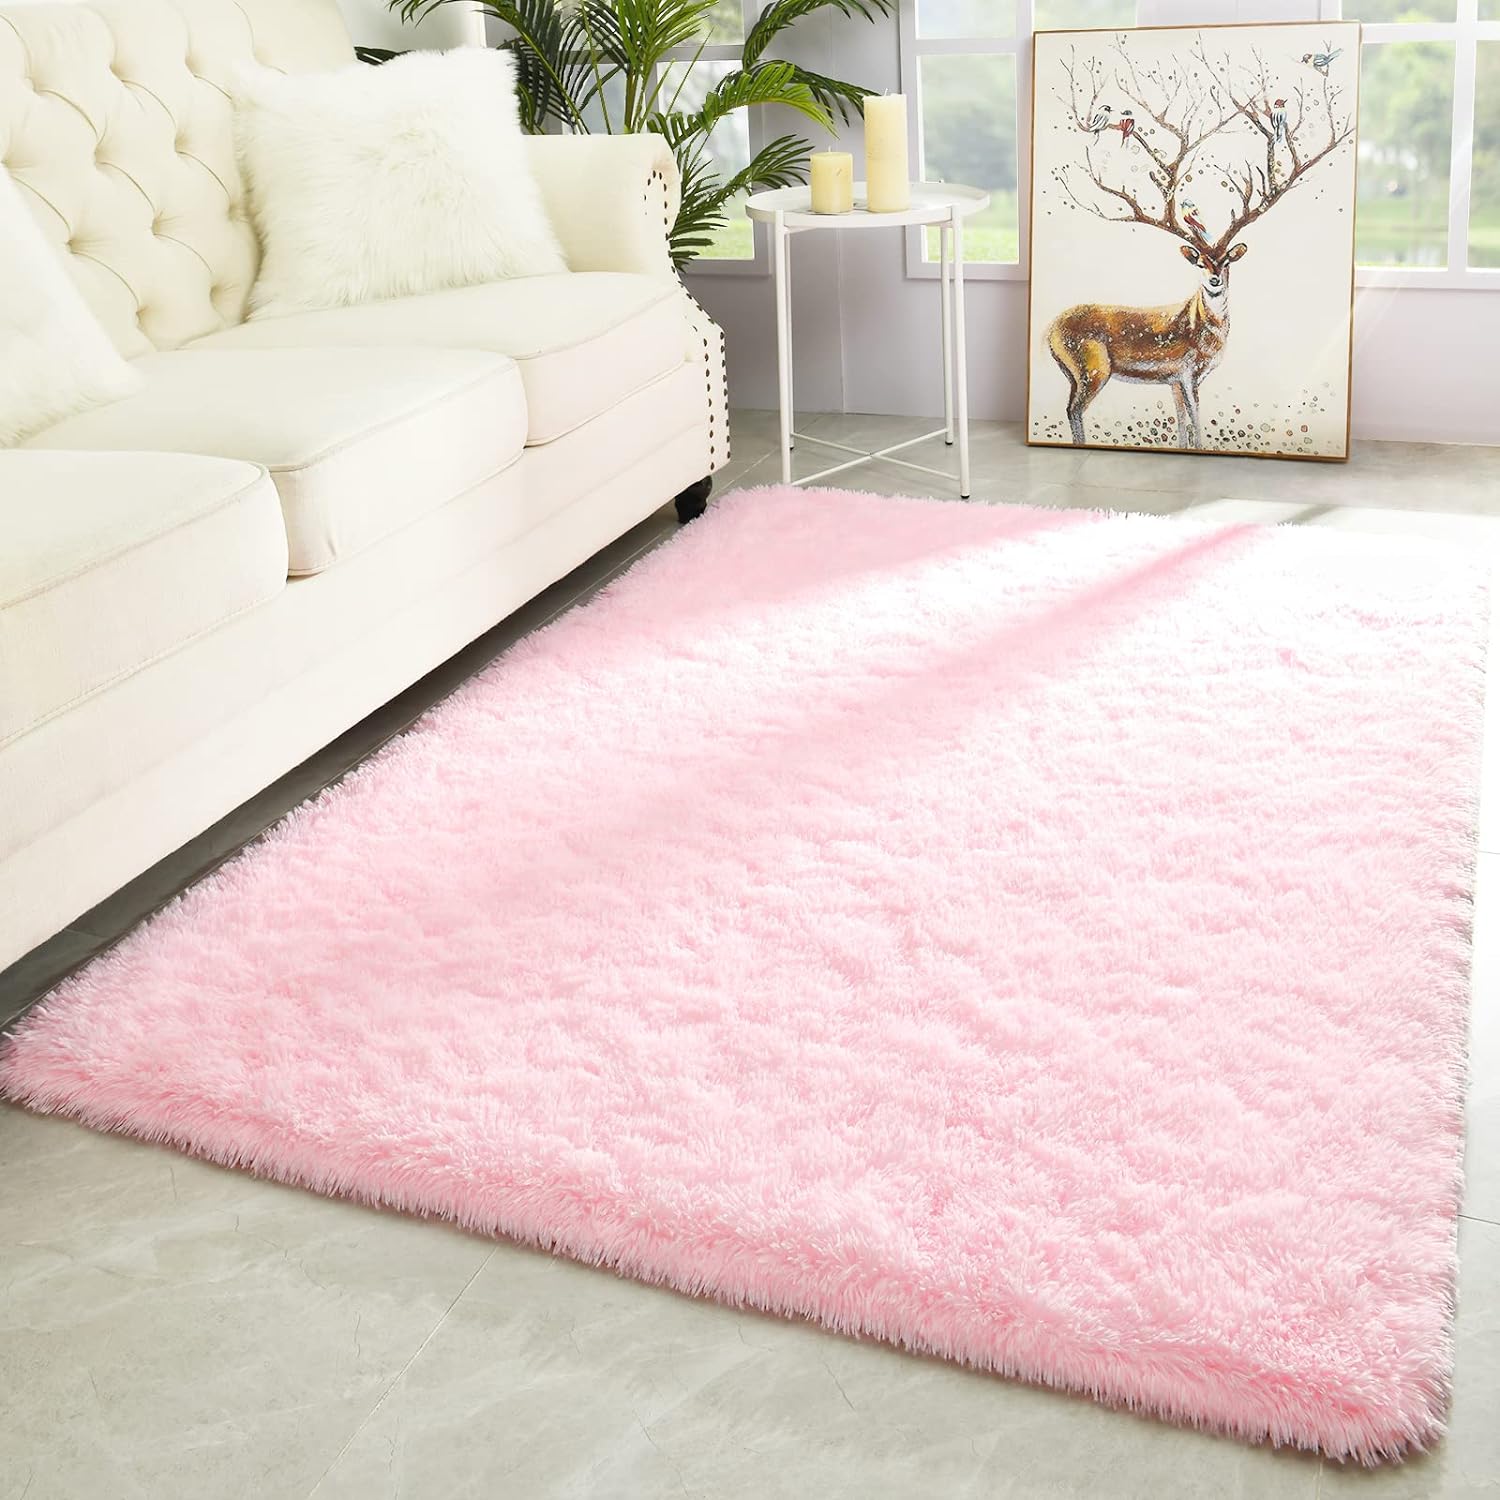 Merelax Modern Soft Fluffy Large Shaggy Rug for Bedroom Livingroom Dorm Kids Room Indoor Home Decorative, Non-Slip Plush Furry Fur Area Rugs Comfy Nursery Accent Floor Carpet 4'x6' Pink